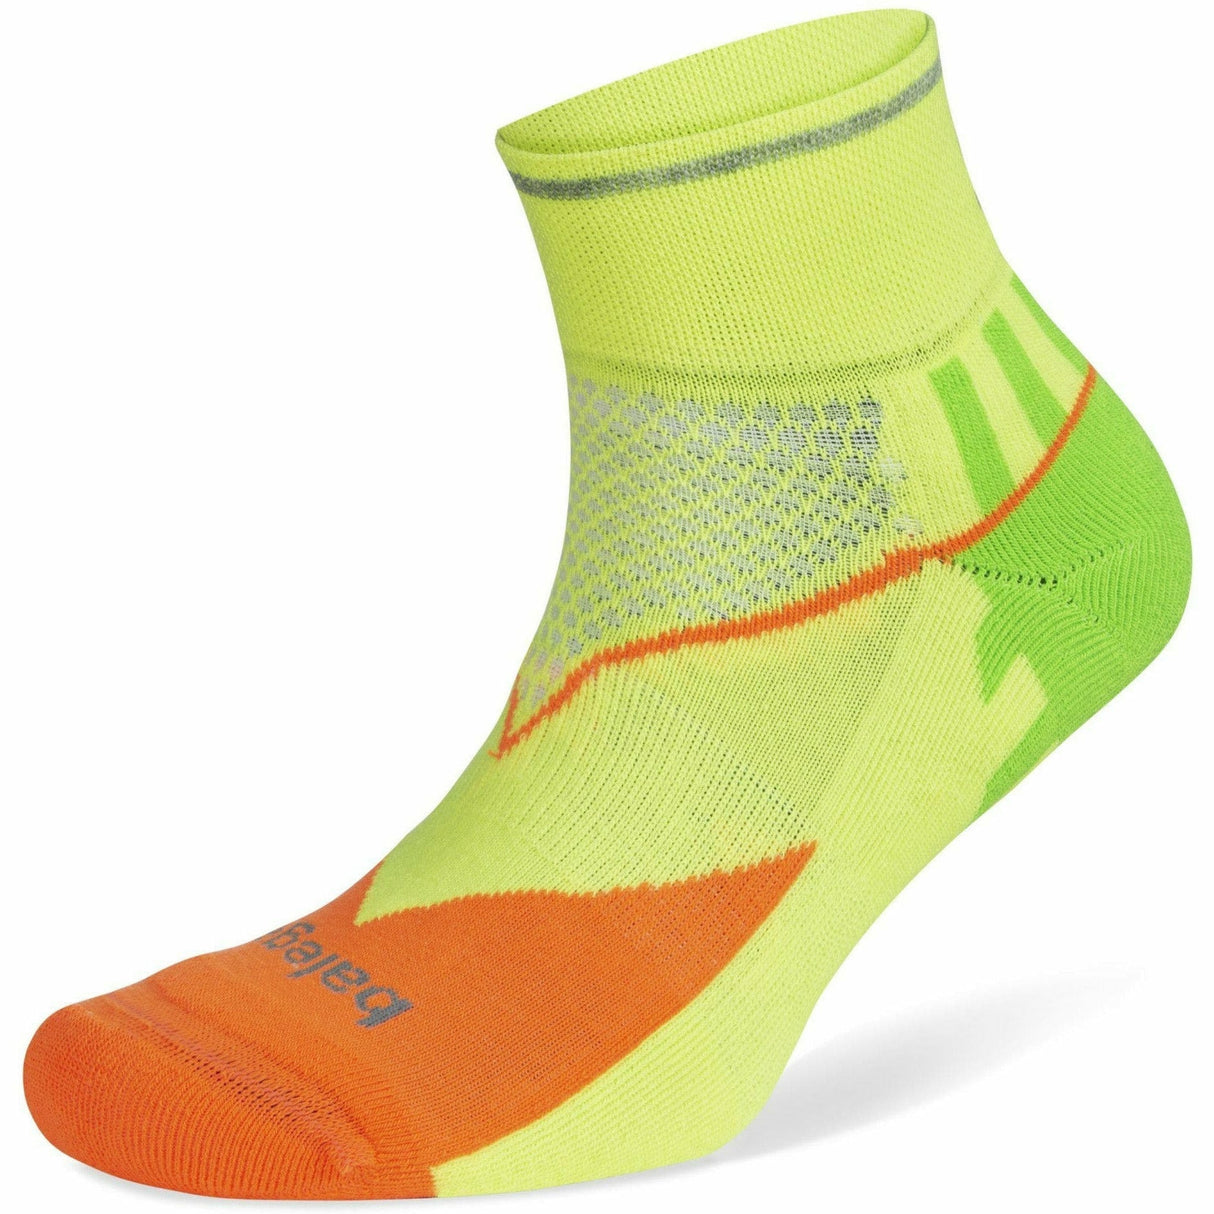 Balega Enduro Reflective Quarter Socks - Clearance  -  Medium / Multi Neon